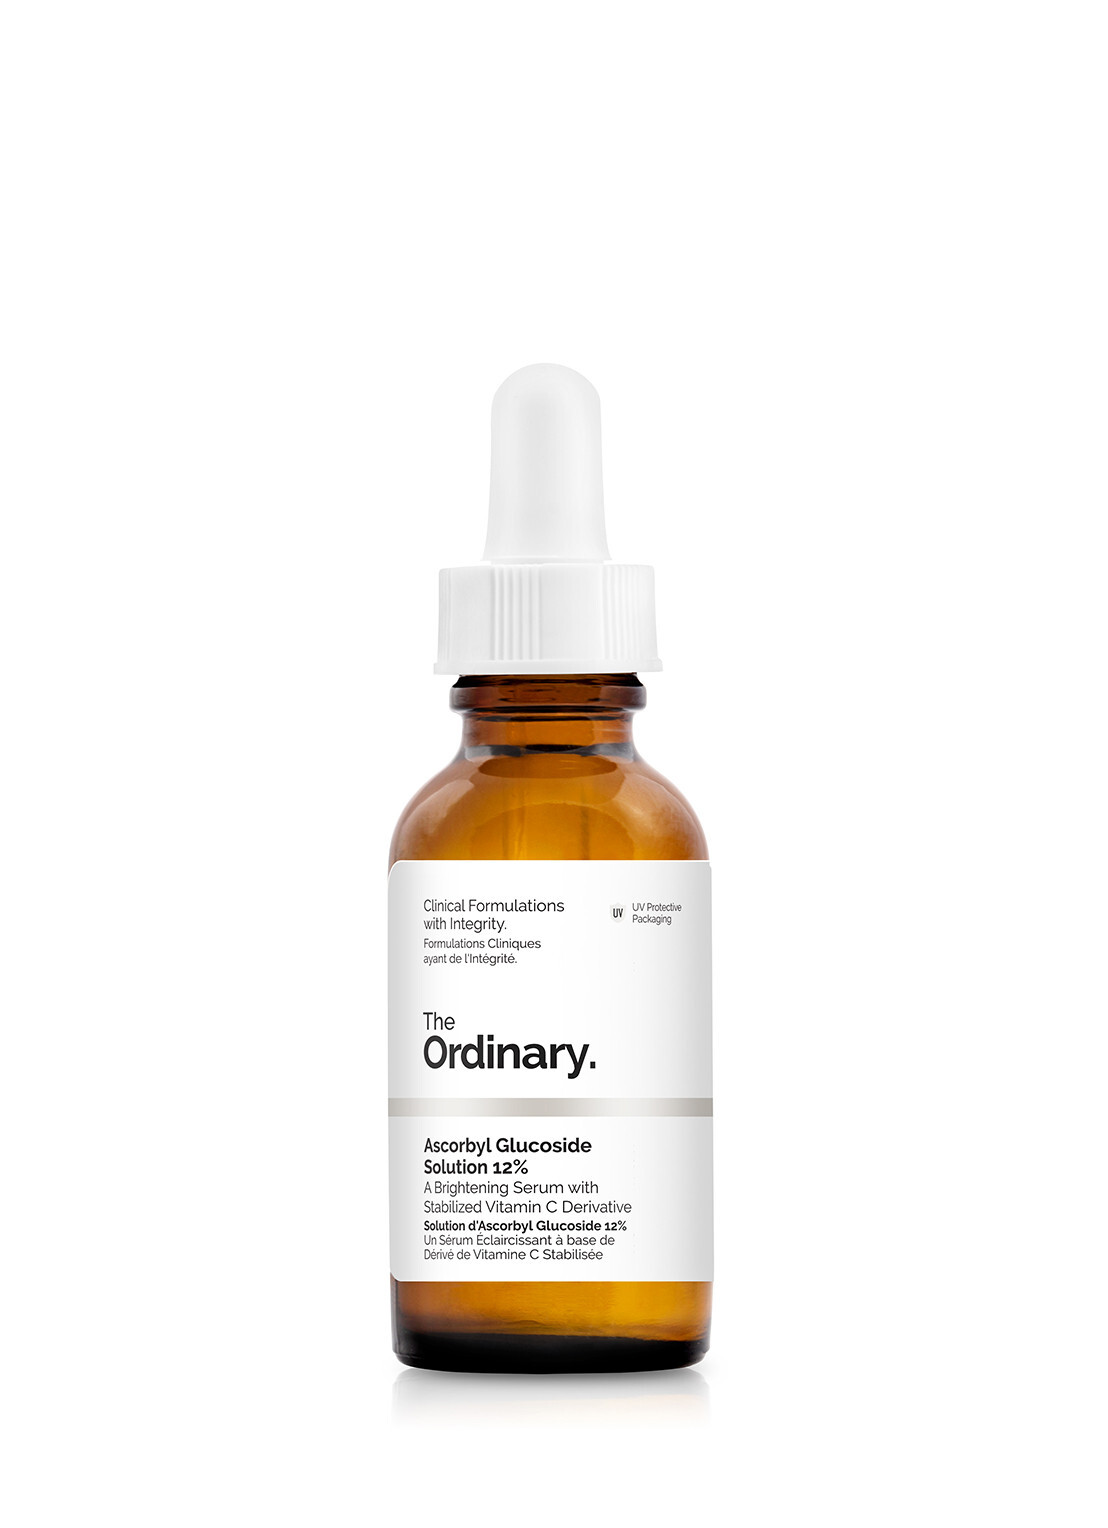 The Ordinary The Ordinary Ascorbyl Glucoside Solution 12% - verhelderend serum